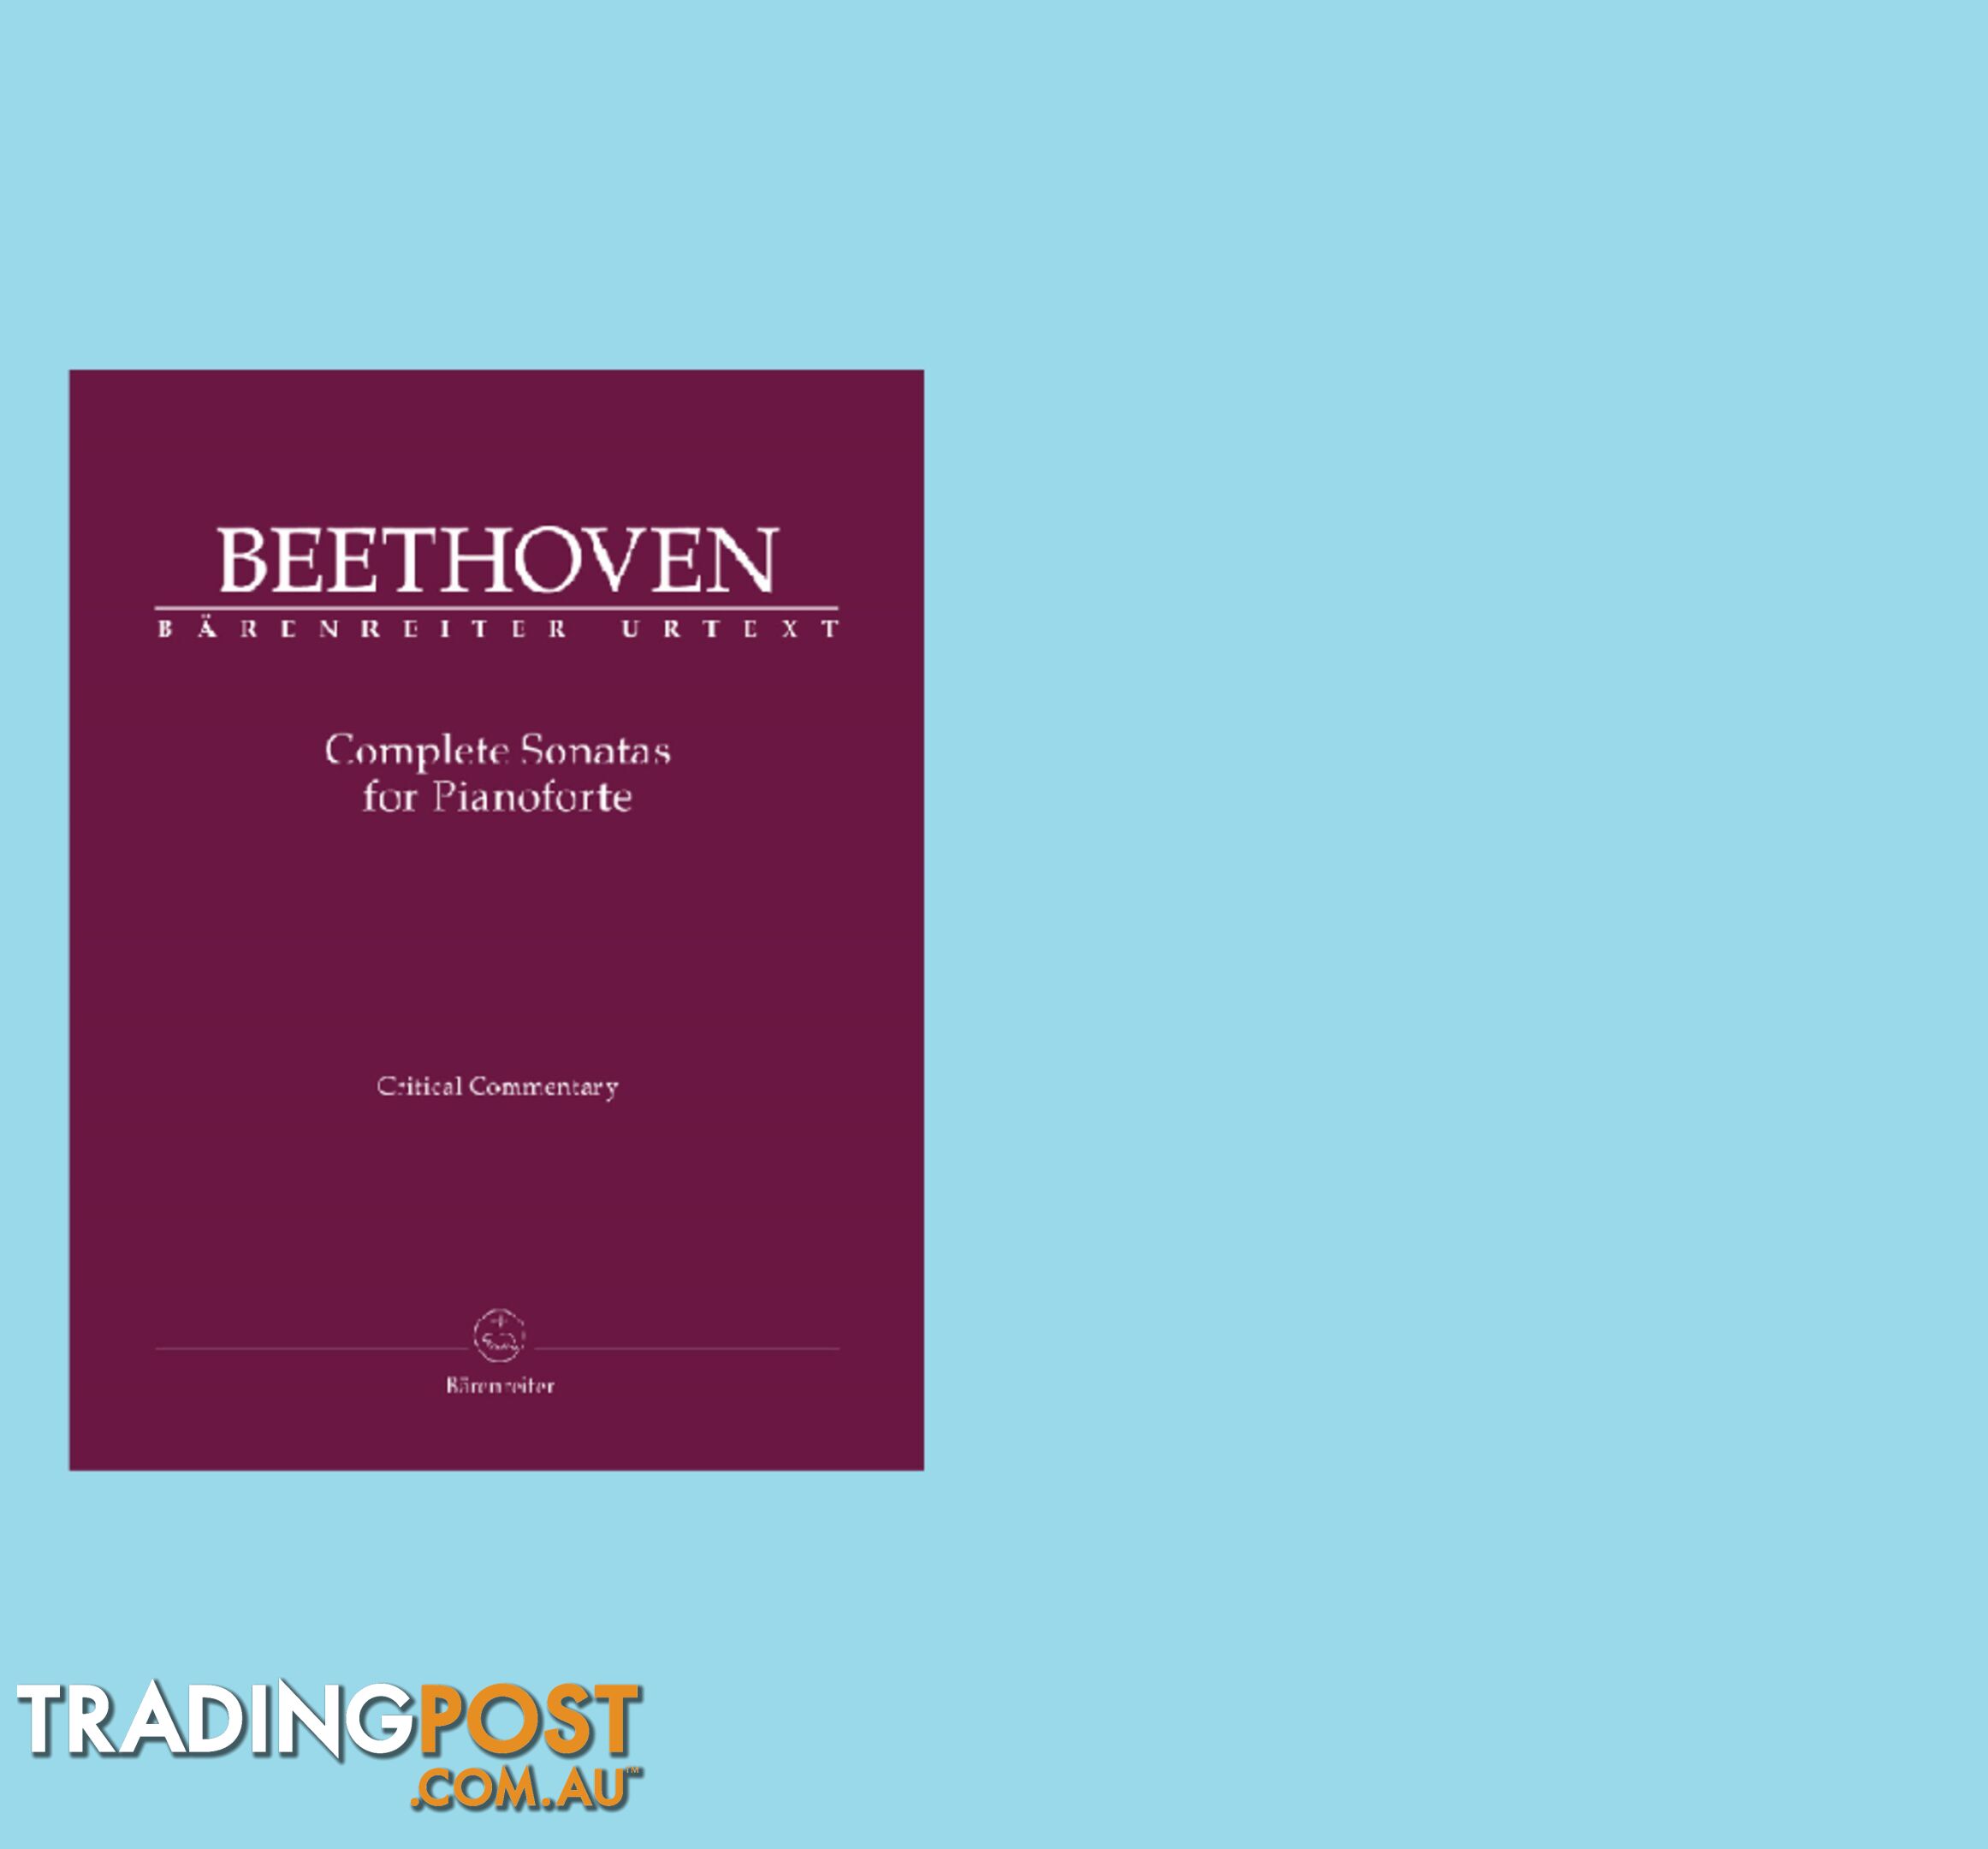 Beethoven - Complete Sonatas for Pianoforte in 3 volumes